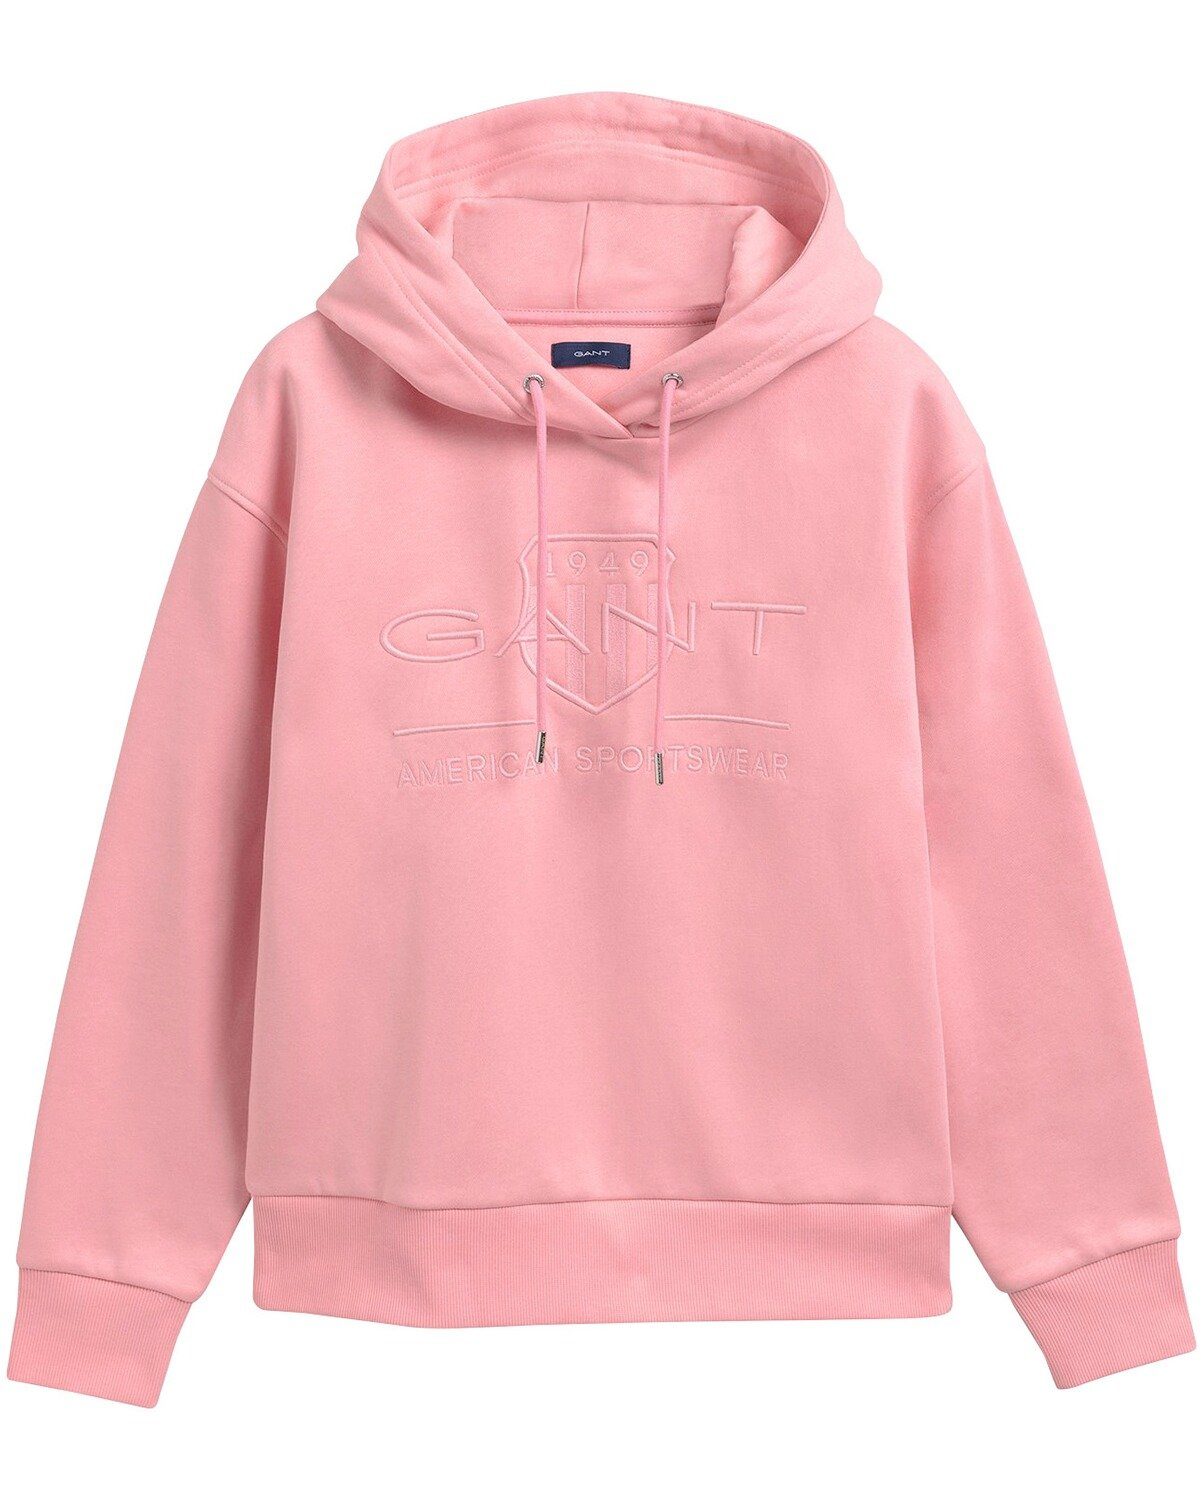 Sweatshirt Archive Gant Shield Hoodie Pink Tonal Geranium